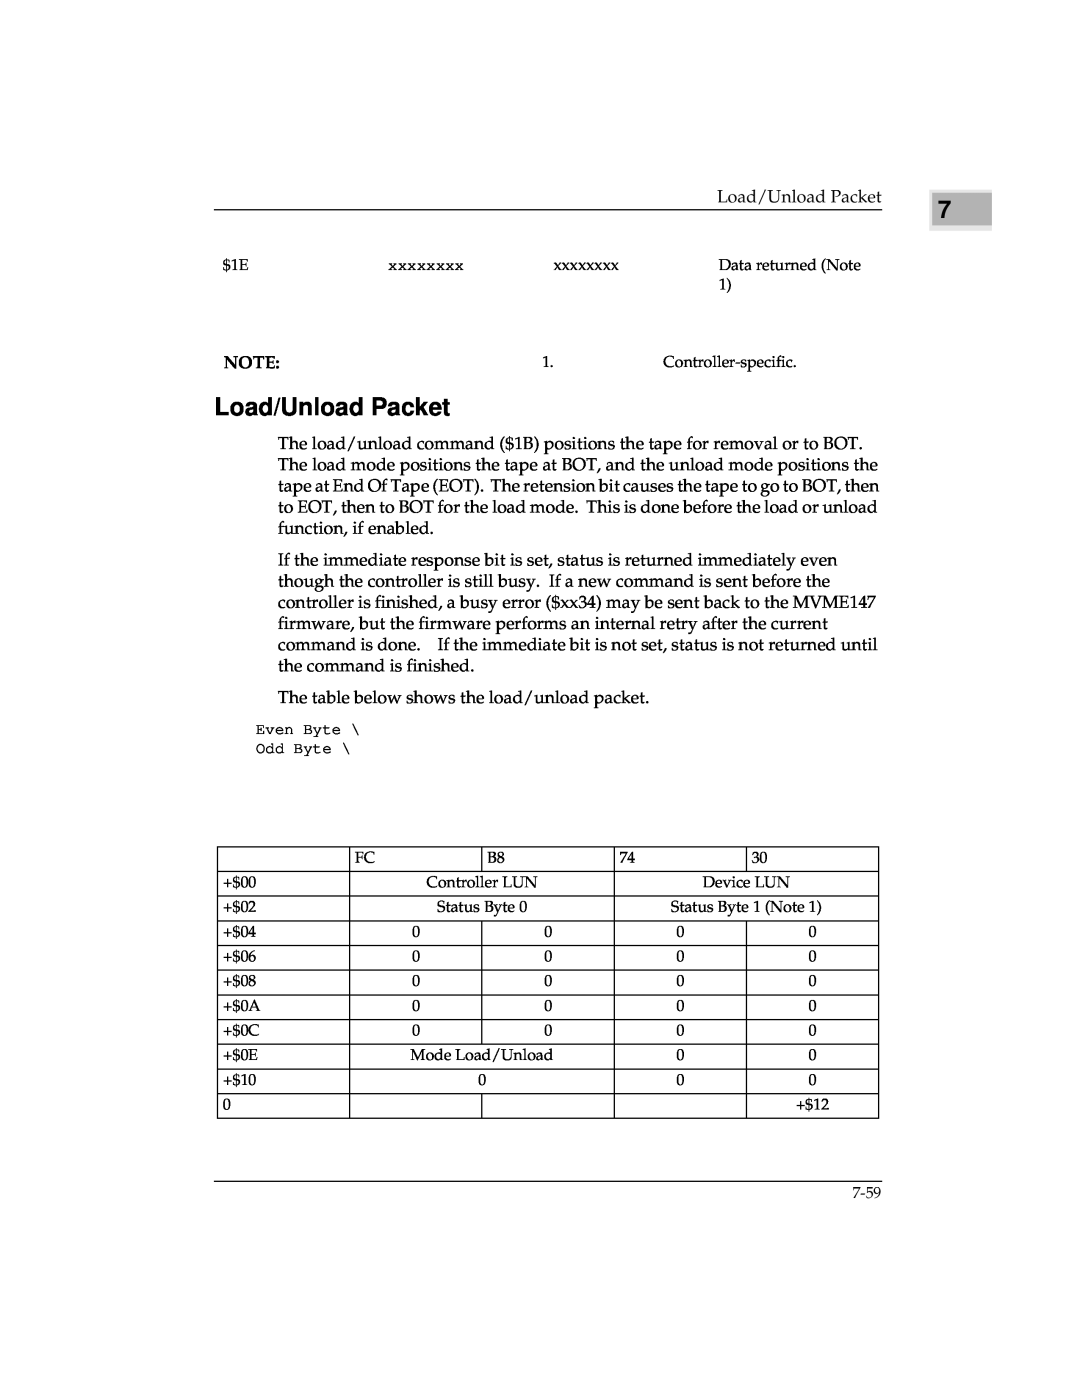 Emerson MVME147 manual Load/Unload Packet 